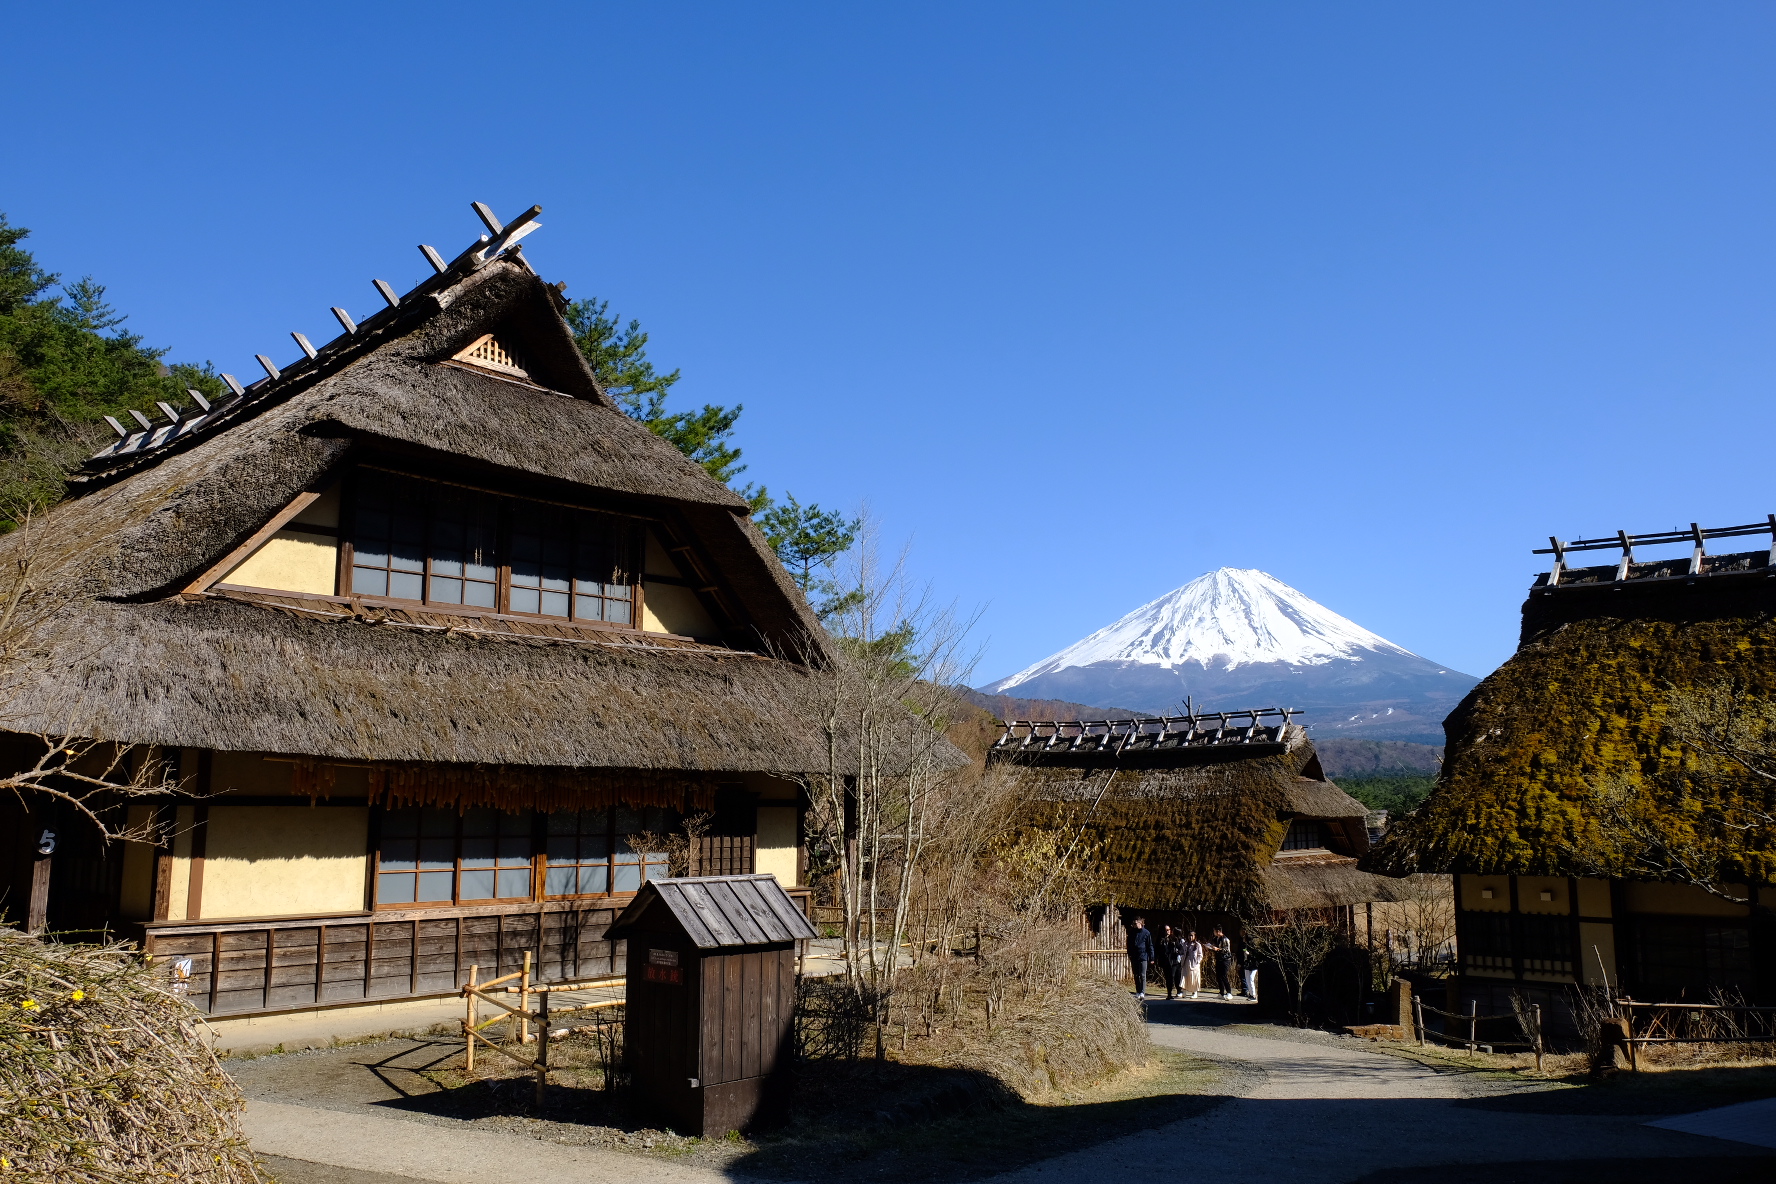 The village's view of Mt. Fuji